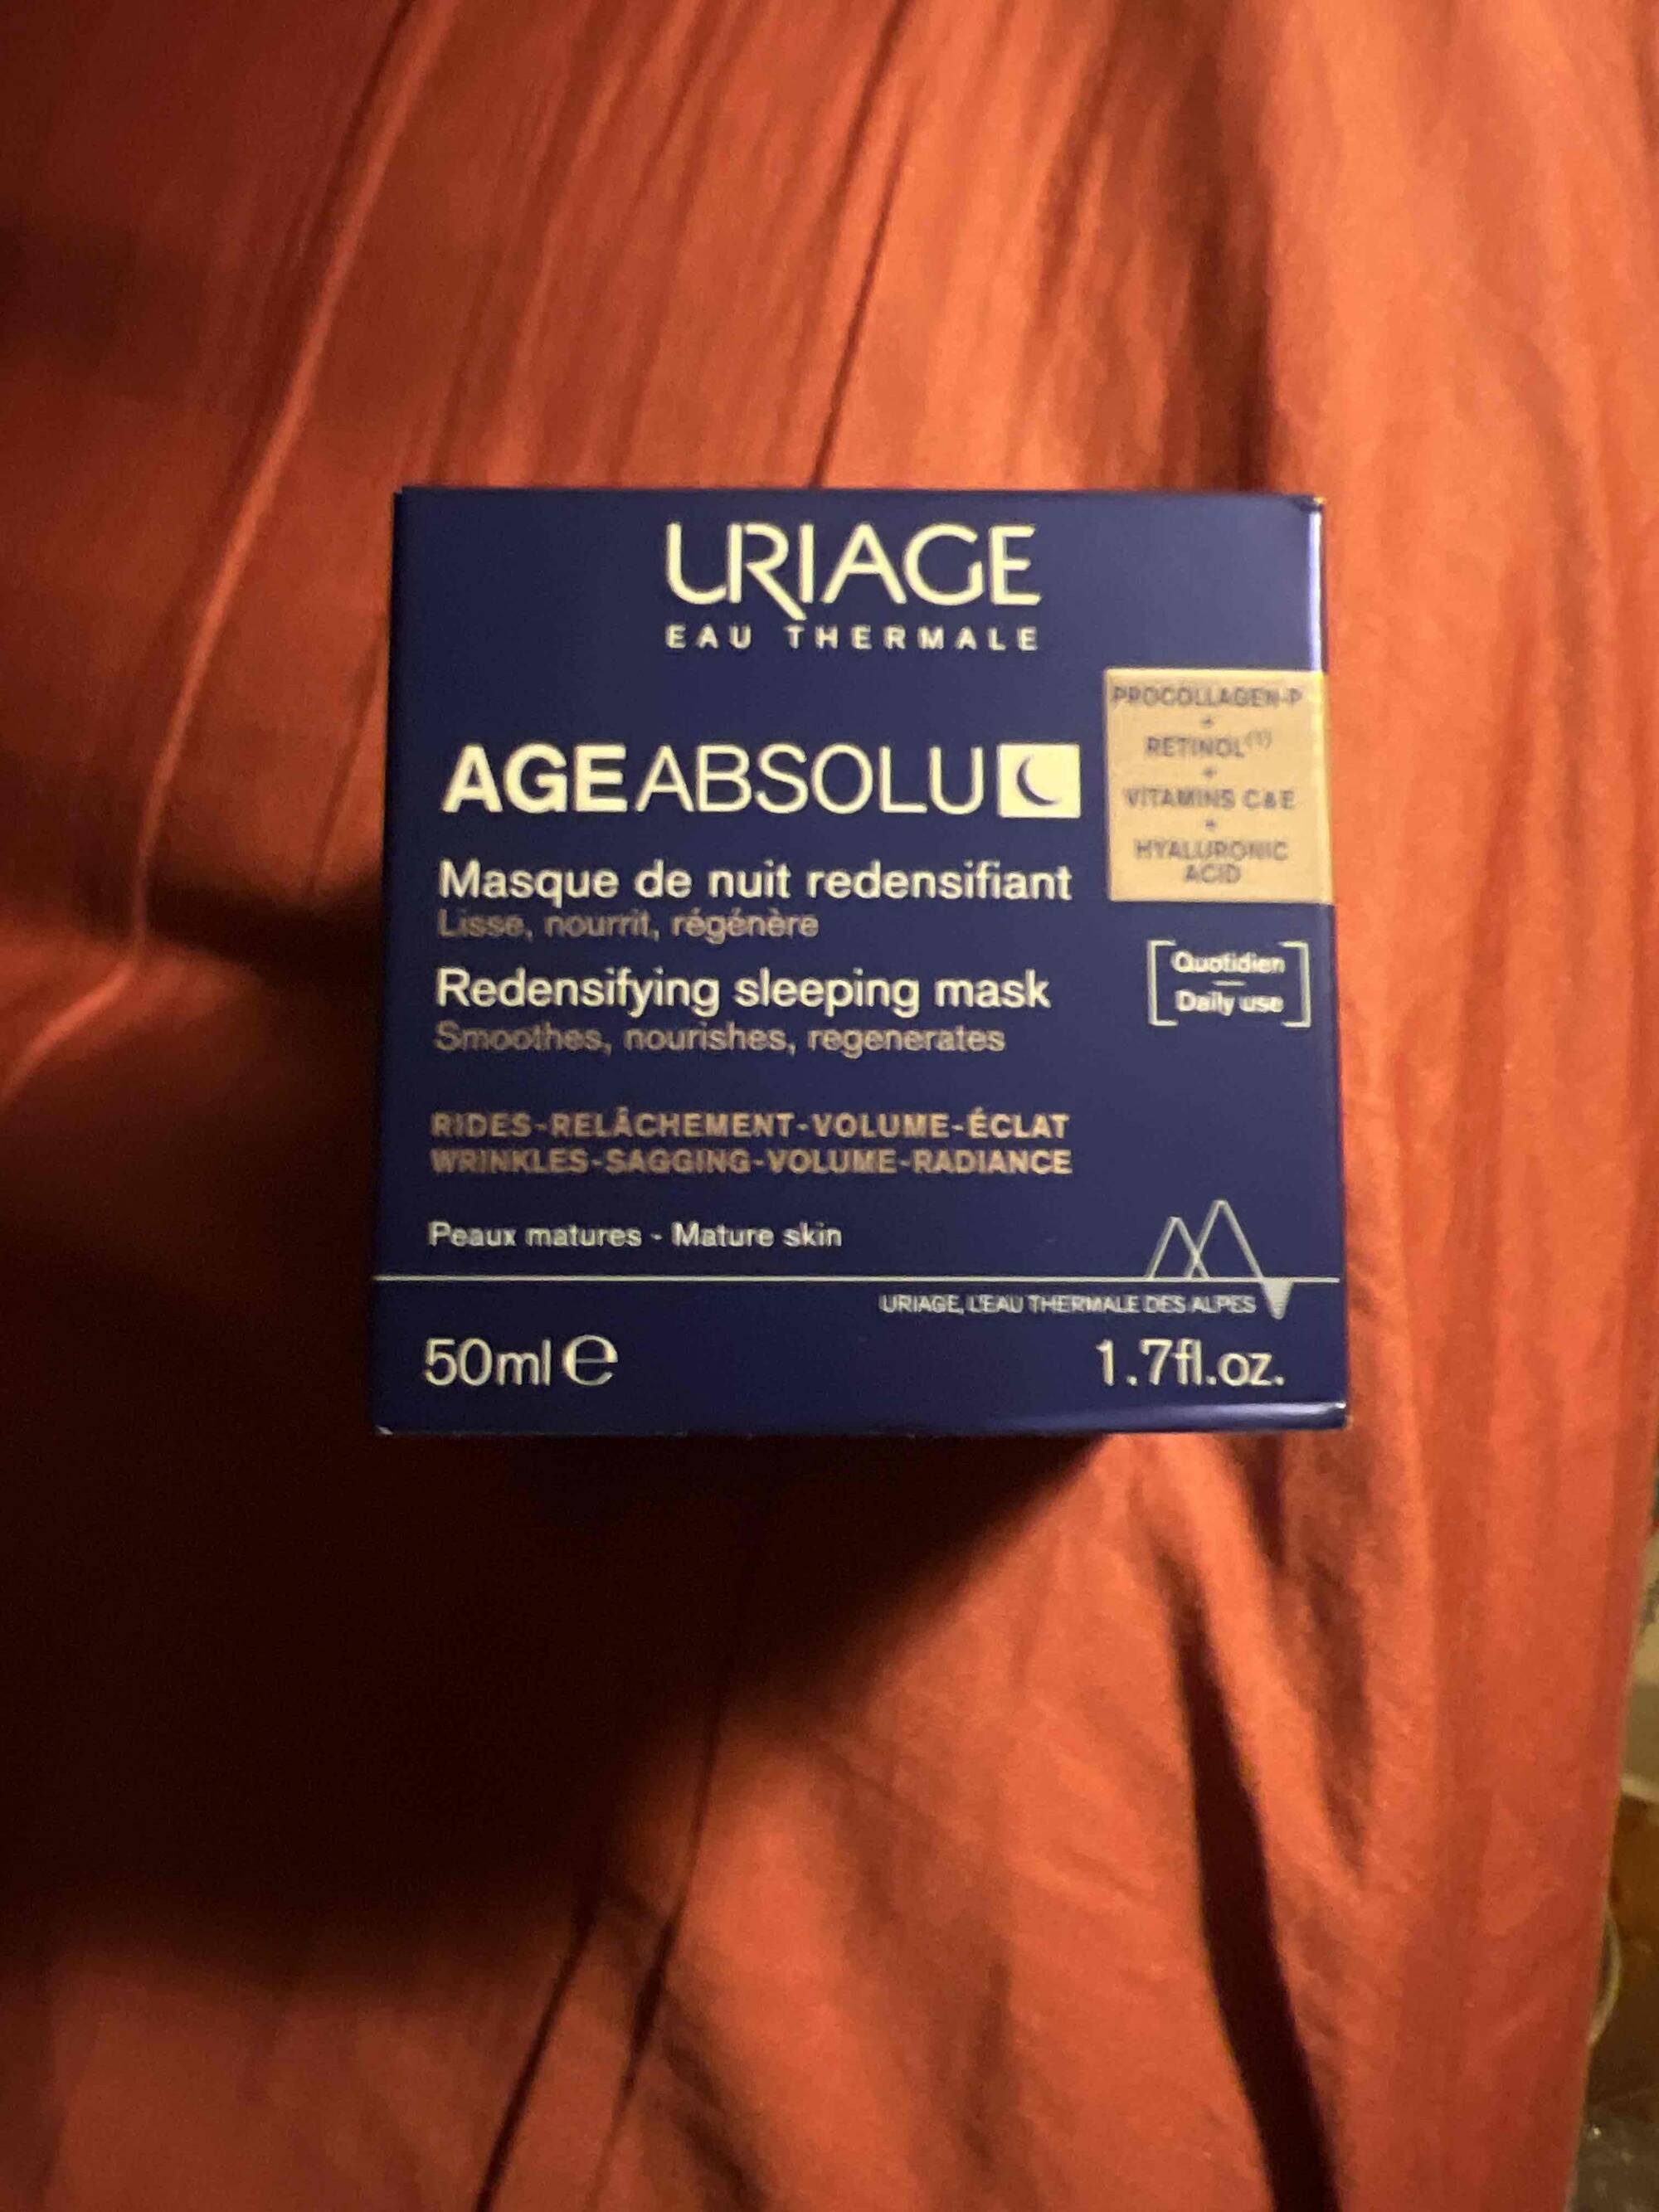 URIAGE - Age absolu - Masque de nuit redensifiant